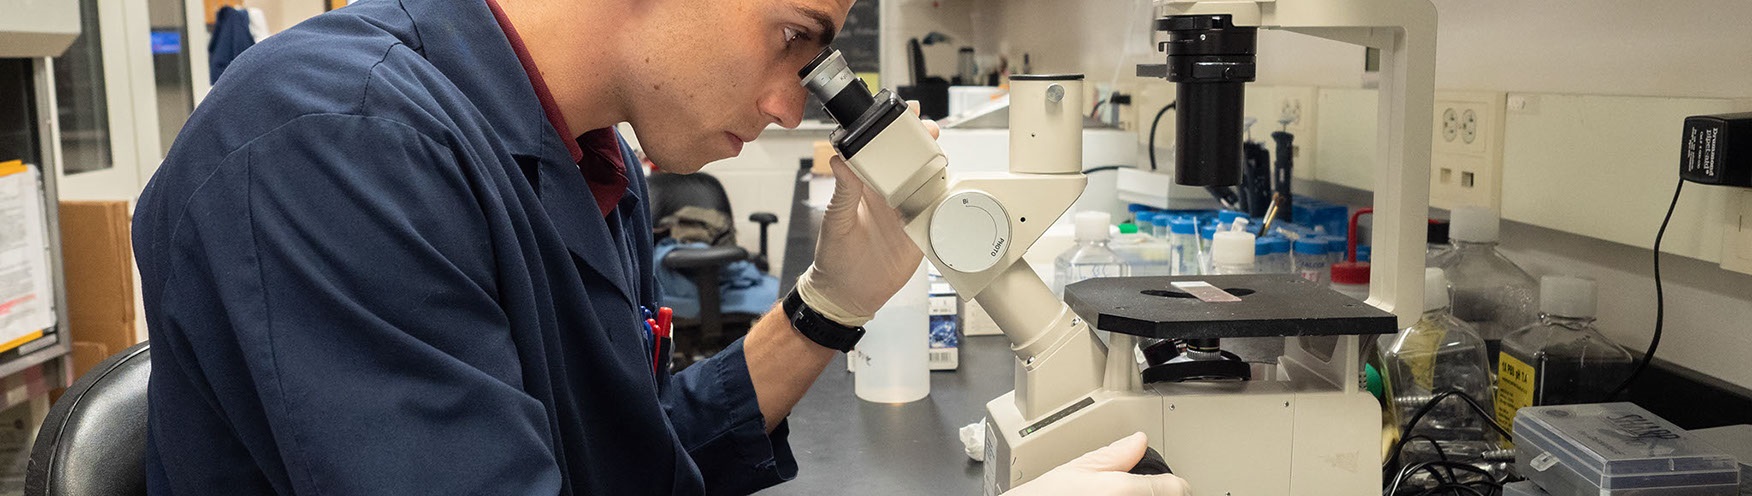 student in lab coat peering through microscope